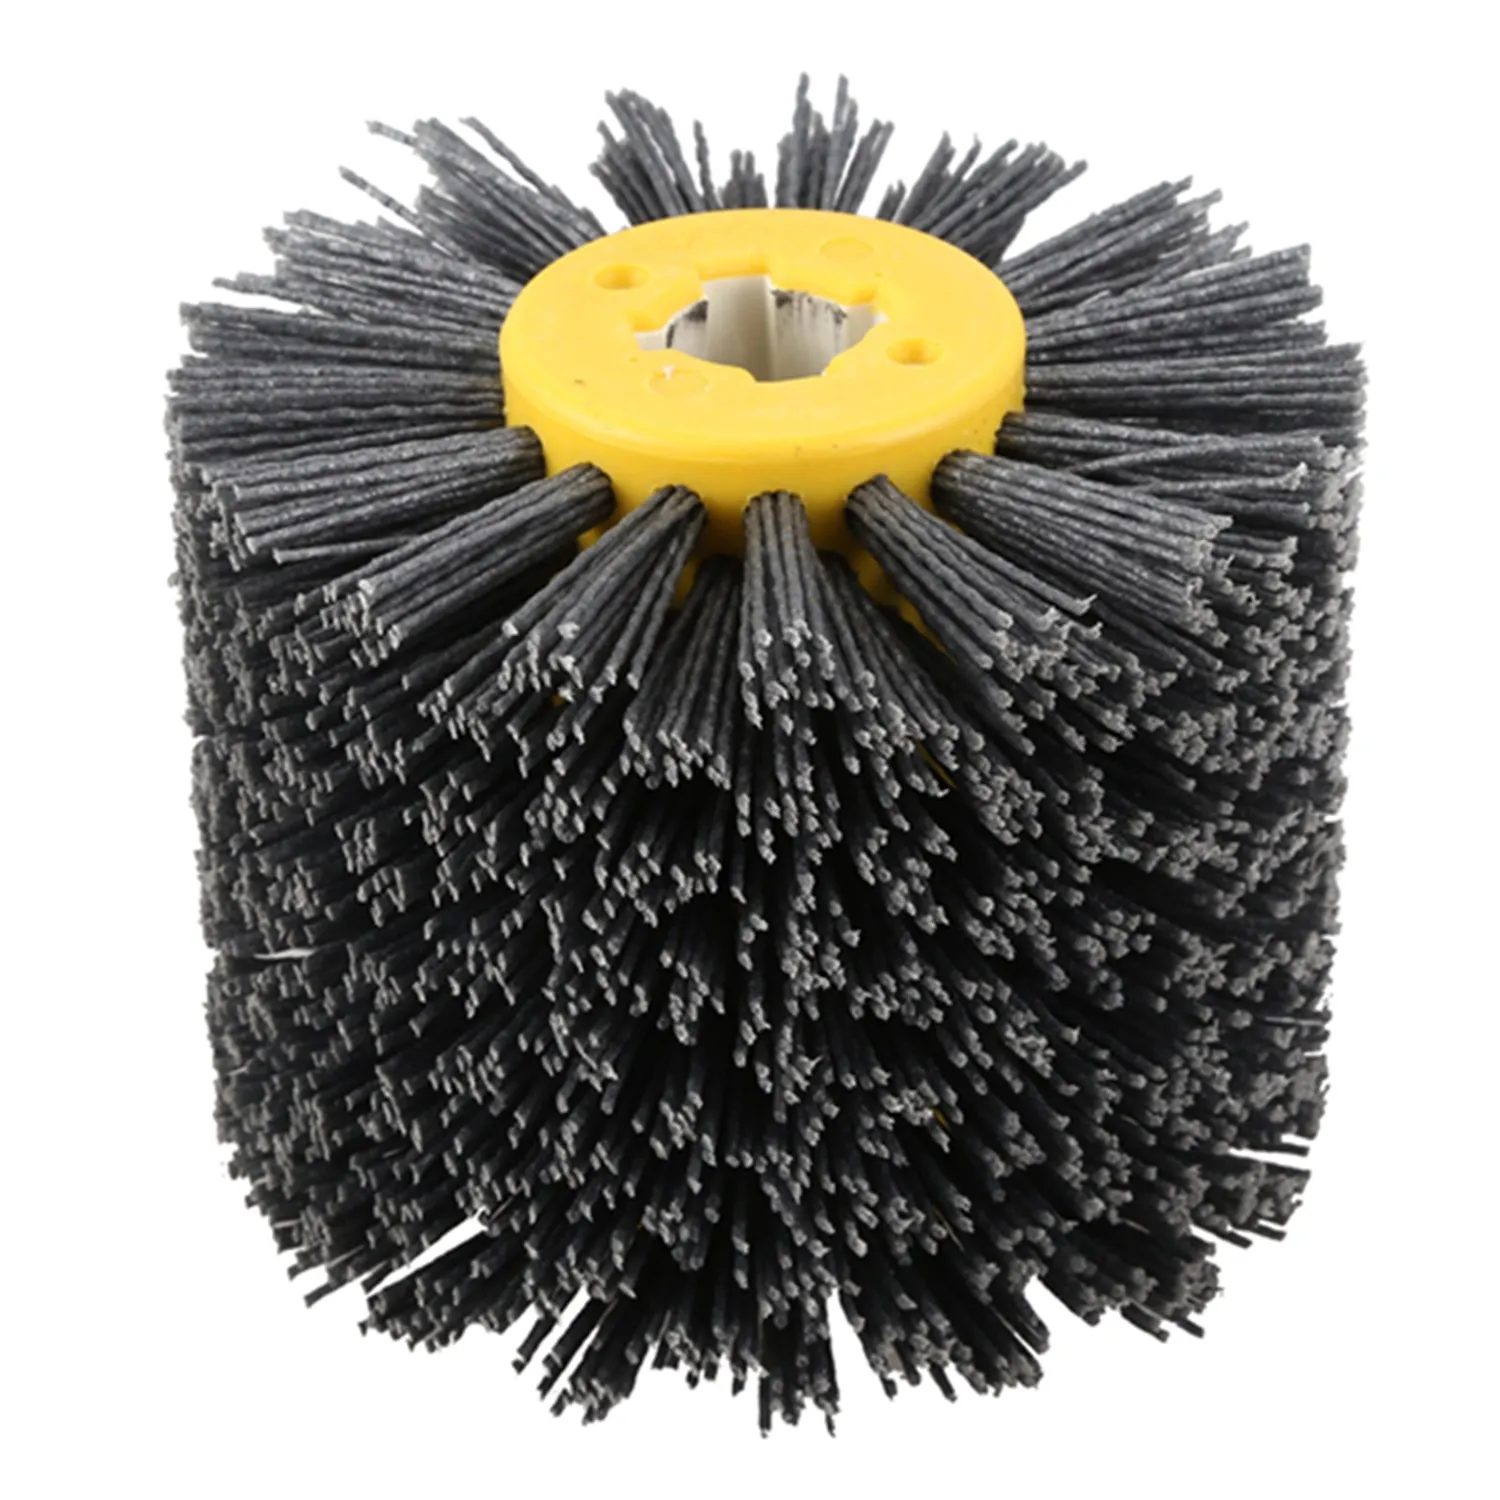 

P80 1 Pcs Nylon Abrasive Wire Dupont Drum Polishing Wheel Electric Brush For Woodworking Metalworking